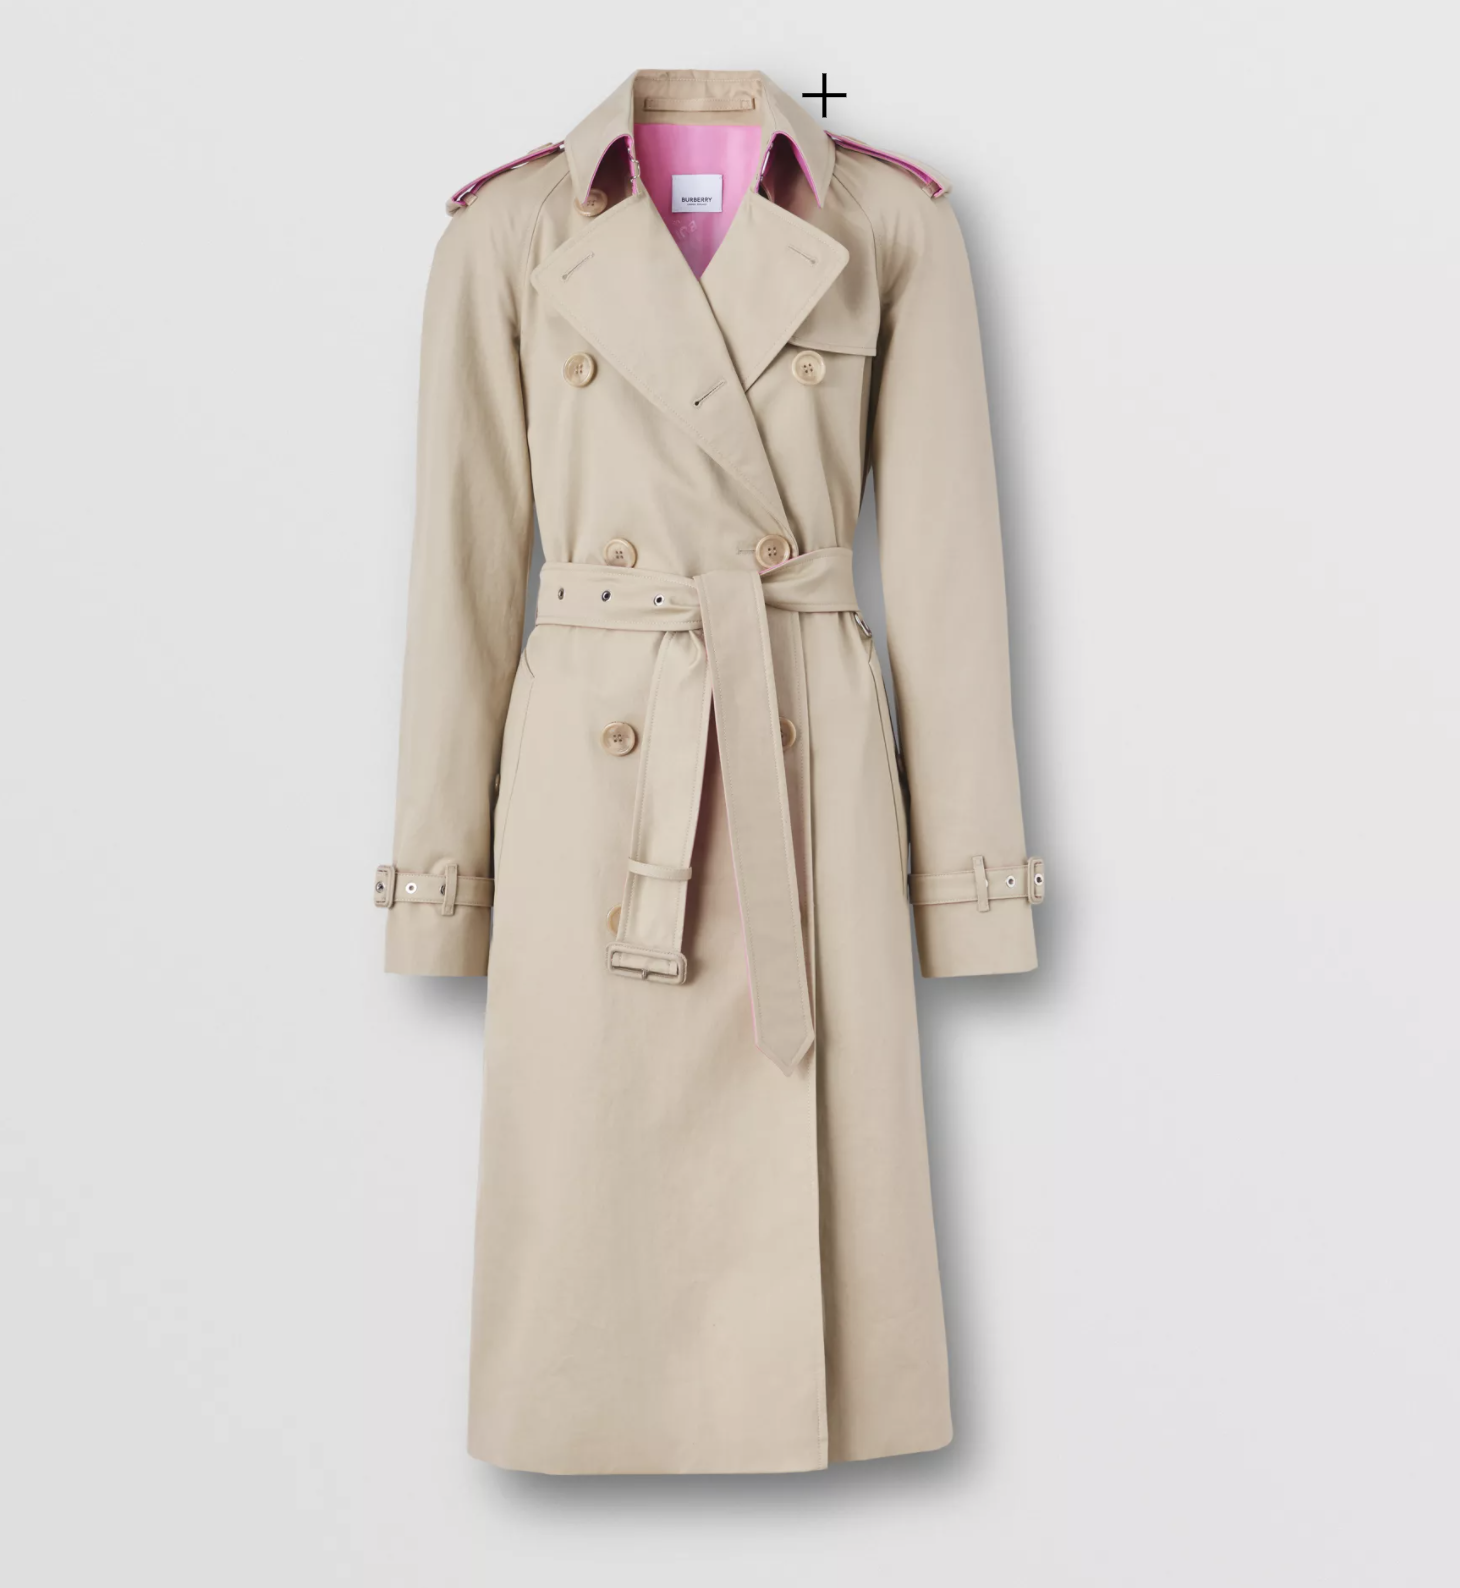 Trench coat en algodón de gabardina con detalles contrastes.